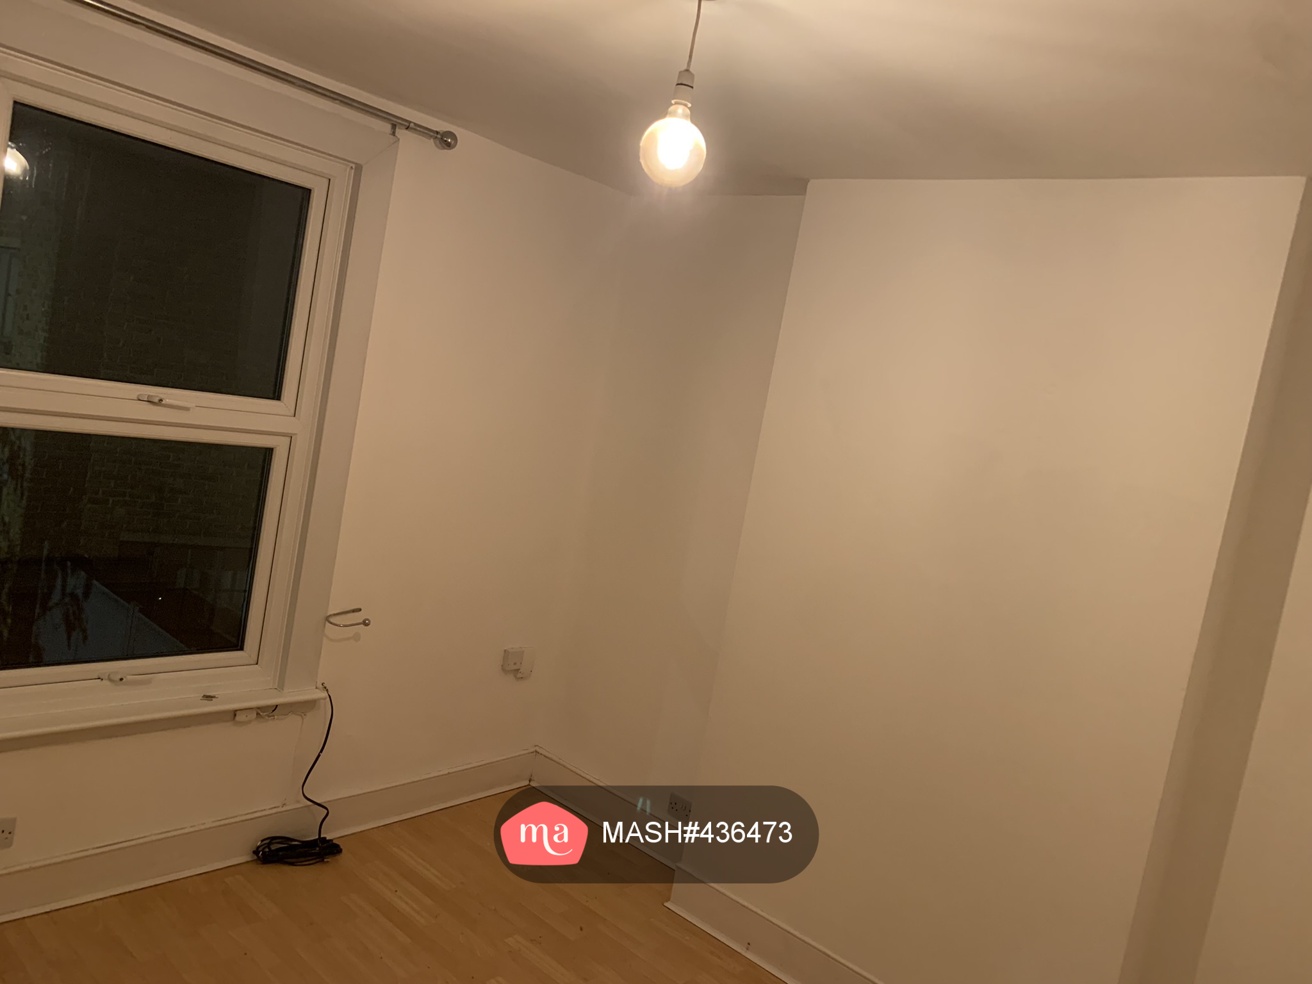 2 Bedroom Flat to rent in London - Mashroom